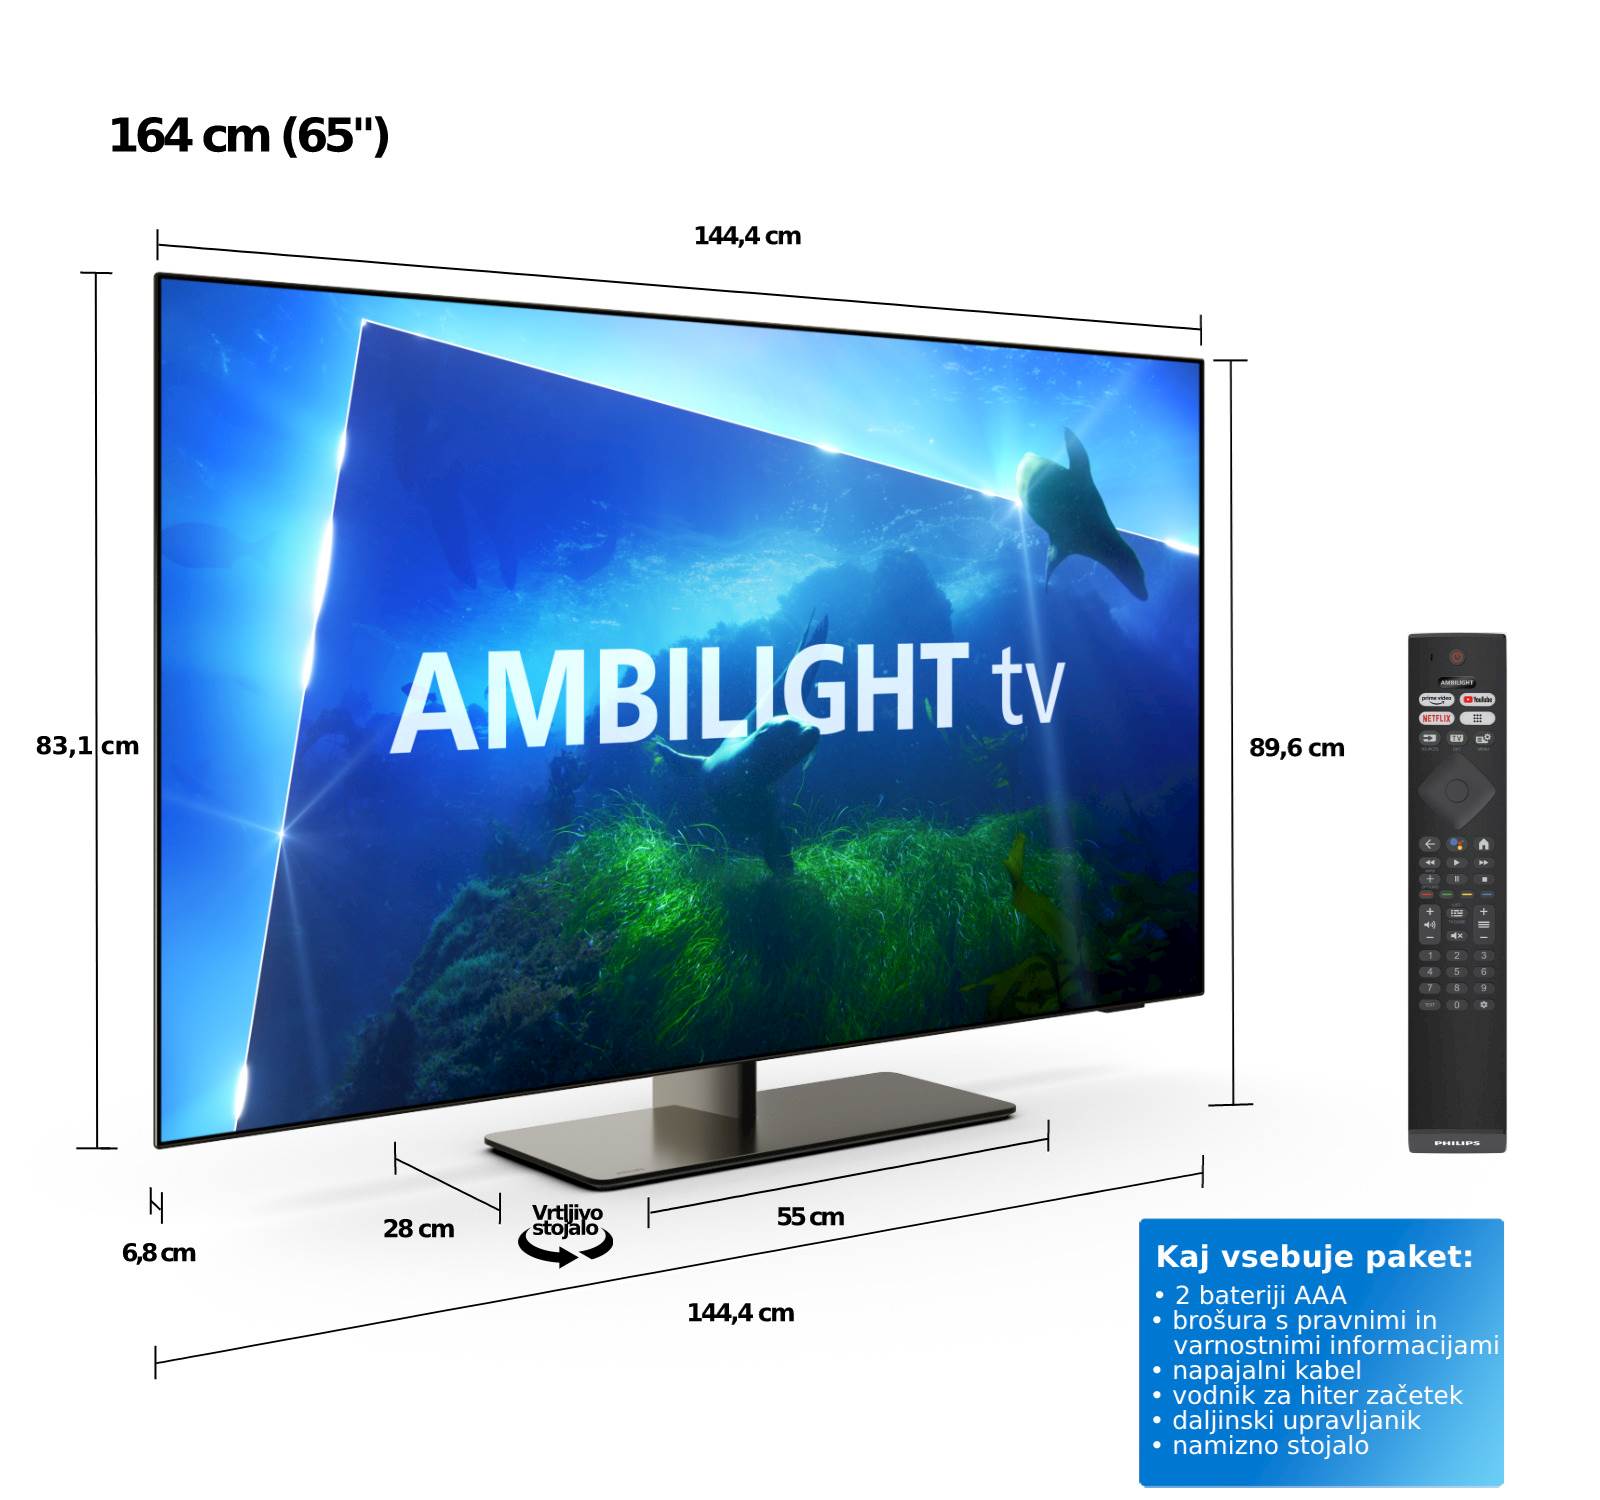 OLED TV Philips 65OLED818